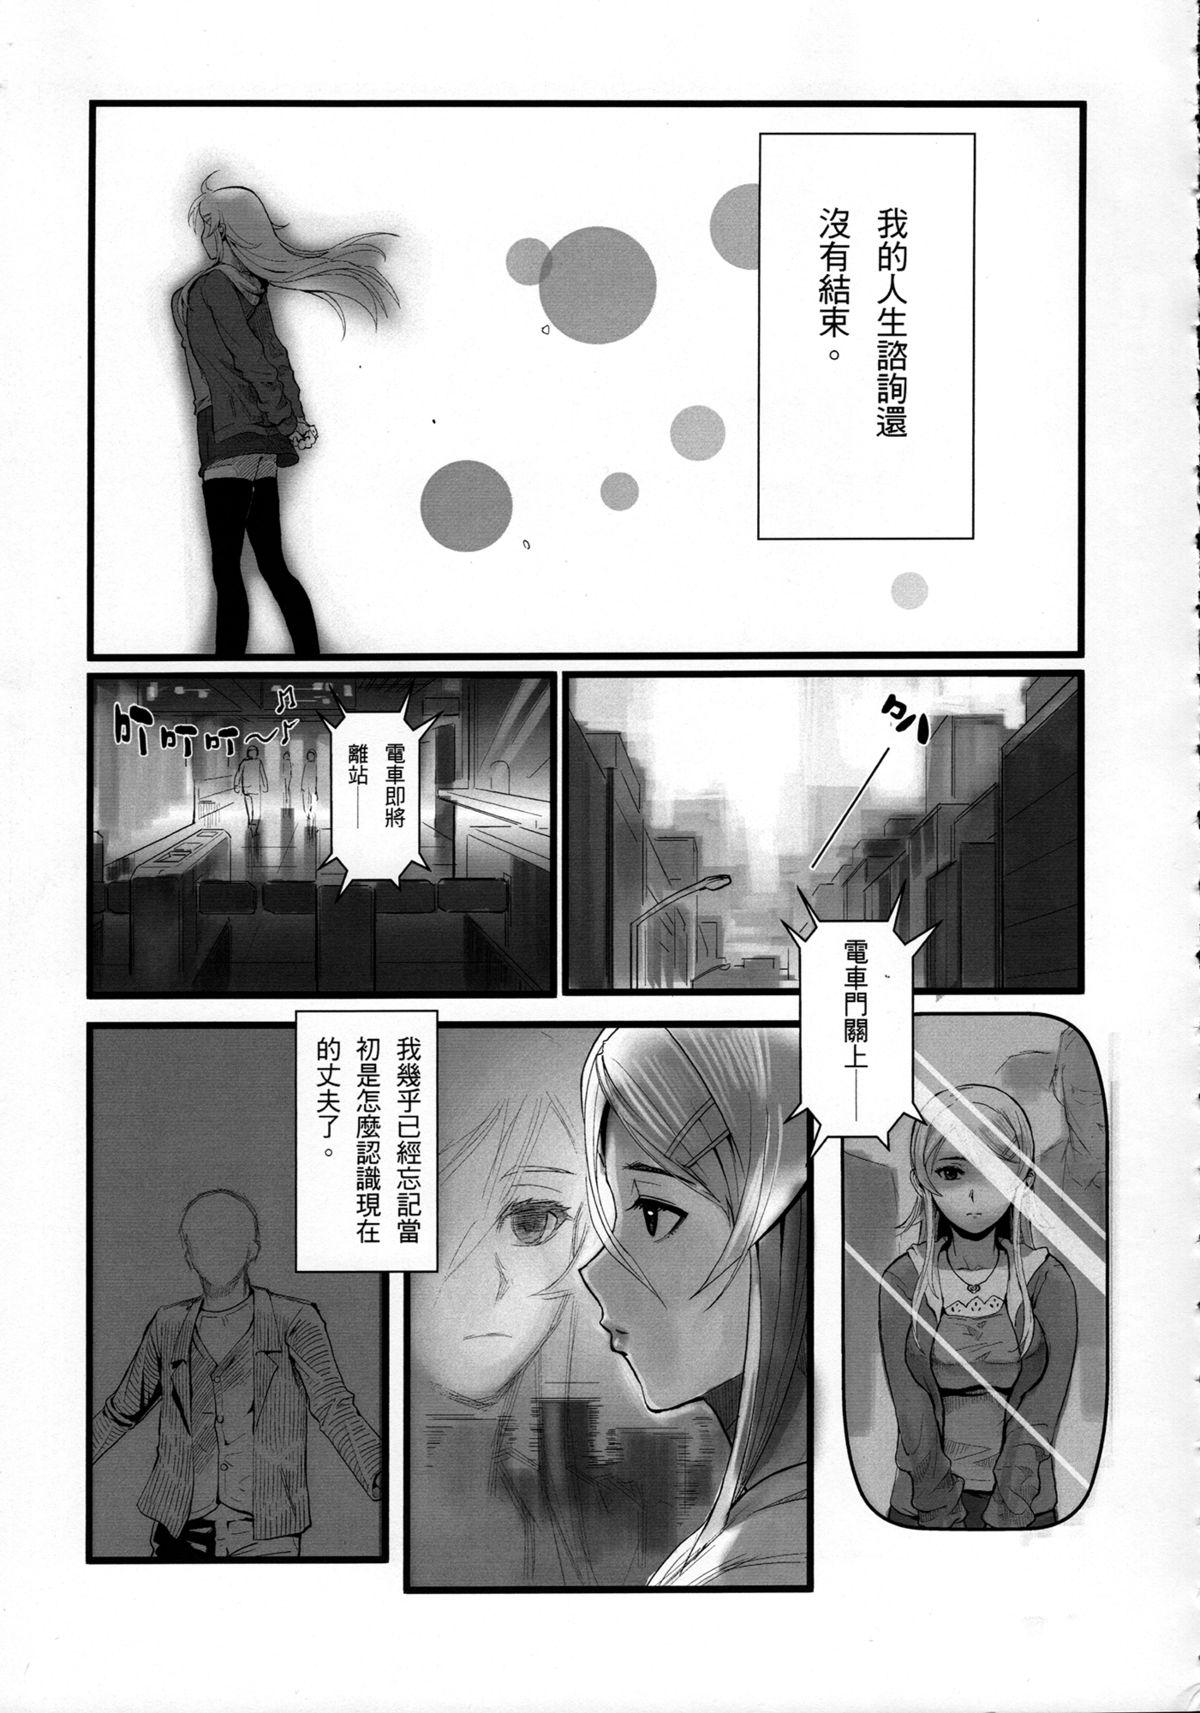 Bitch 十年後的人生諮詢─續 - Ore no imouto ga konna ni kawaii wake ga nai Art - Page 12